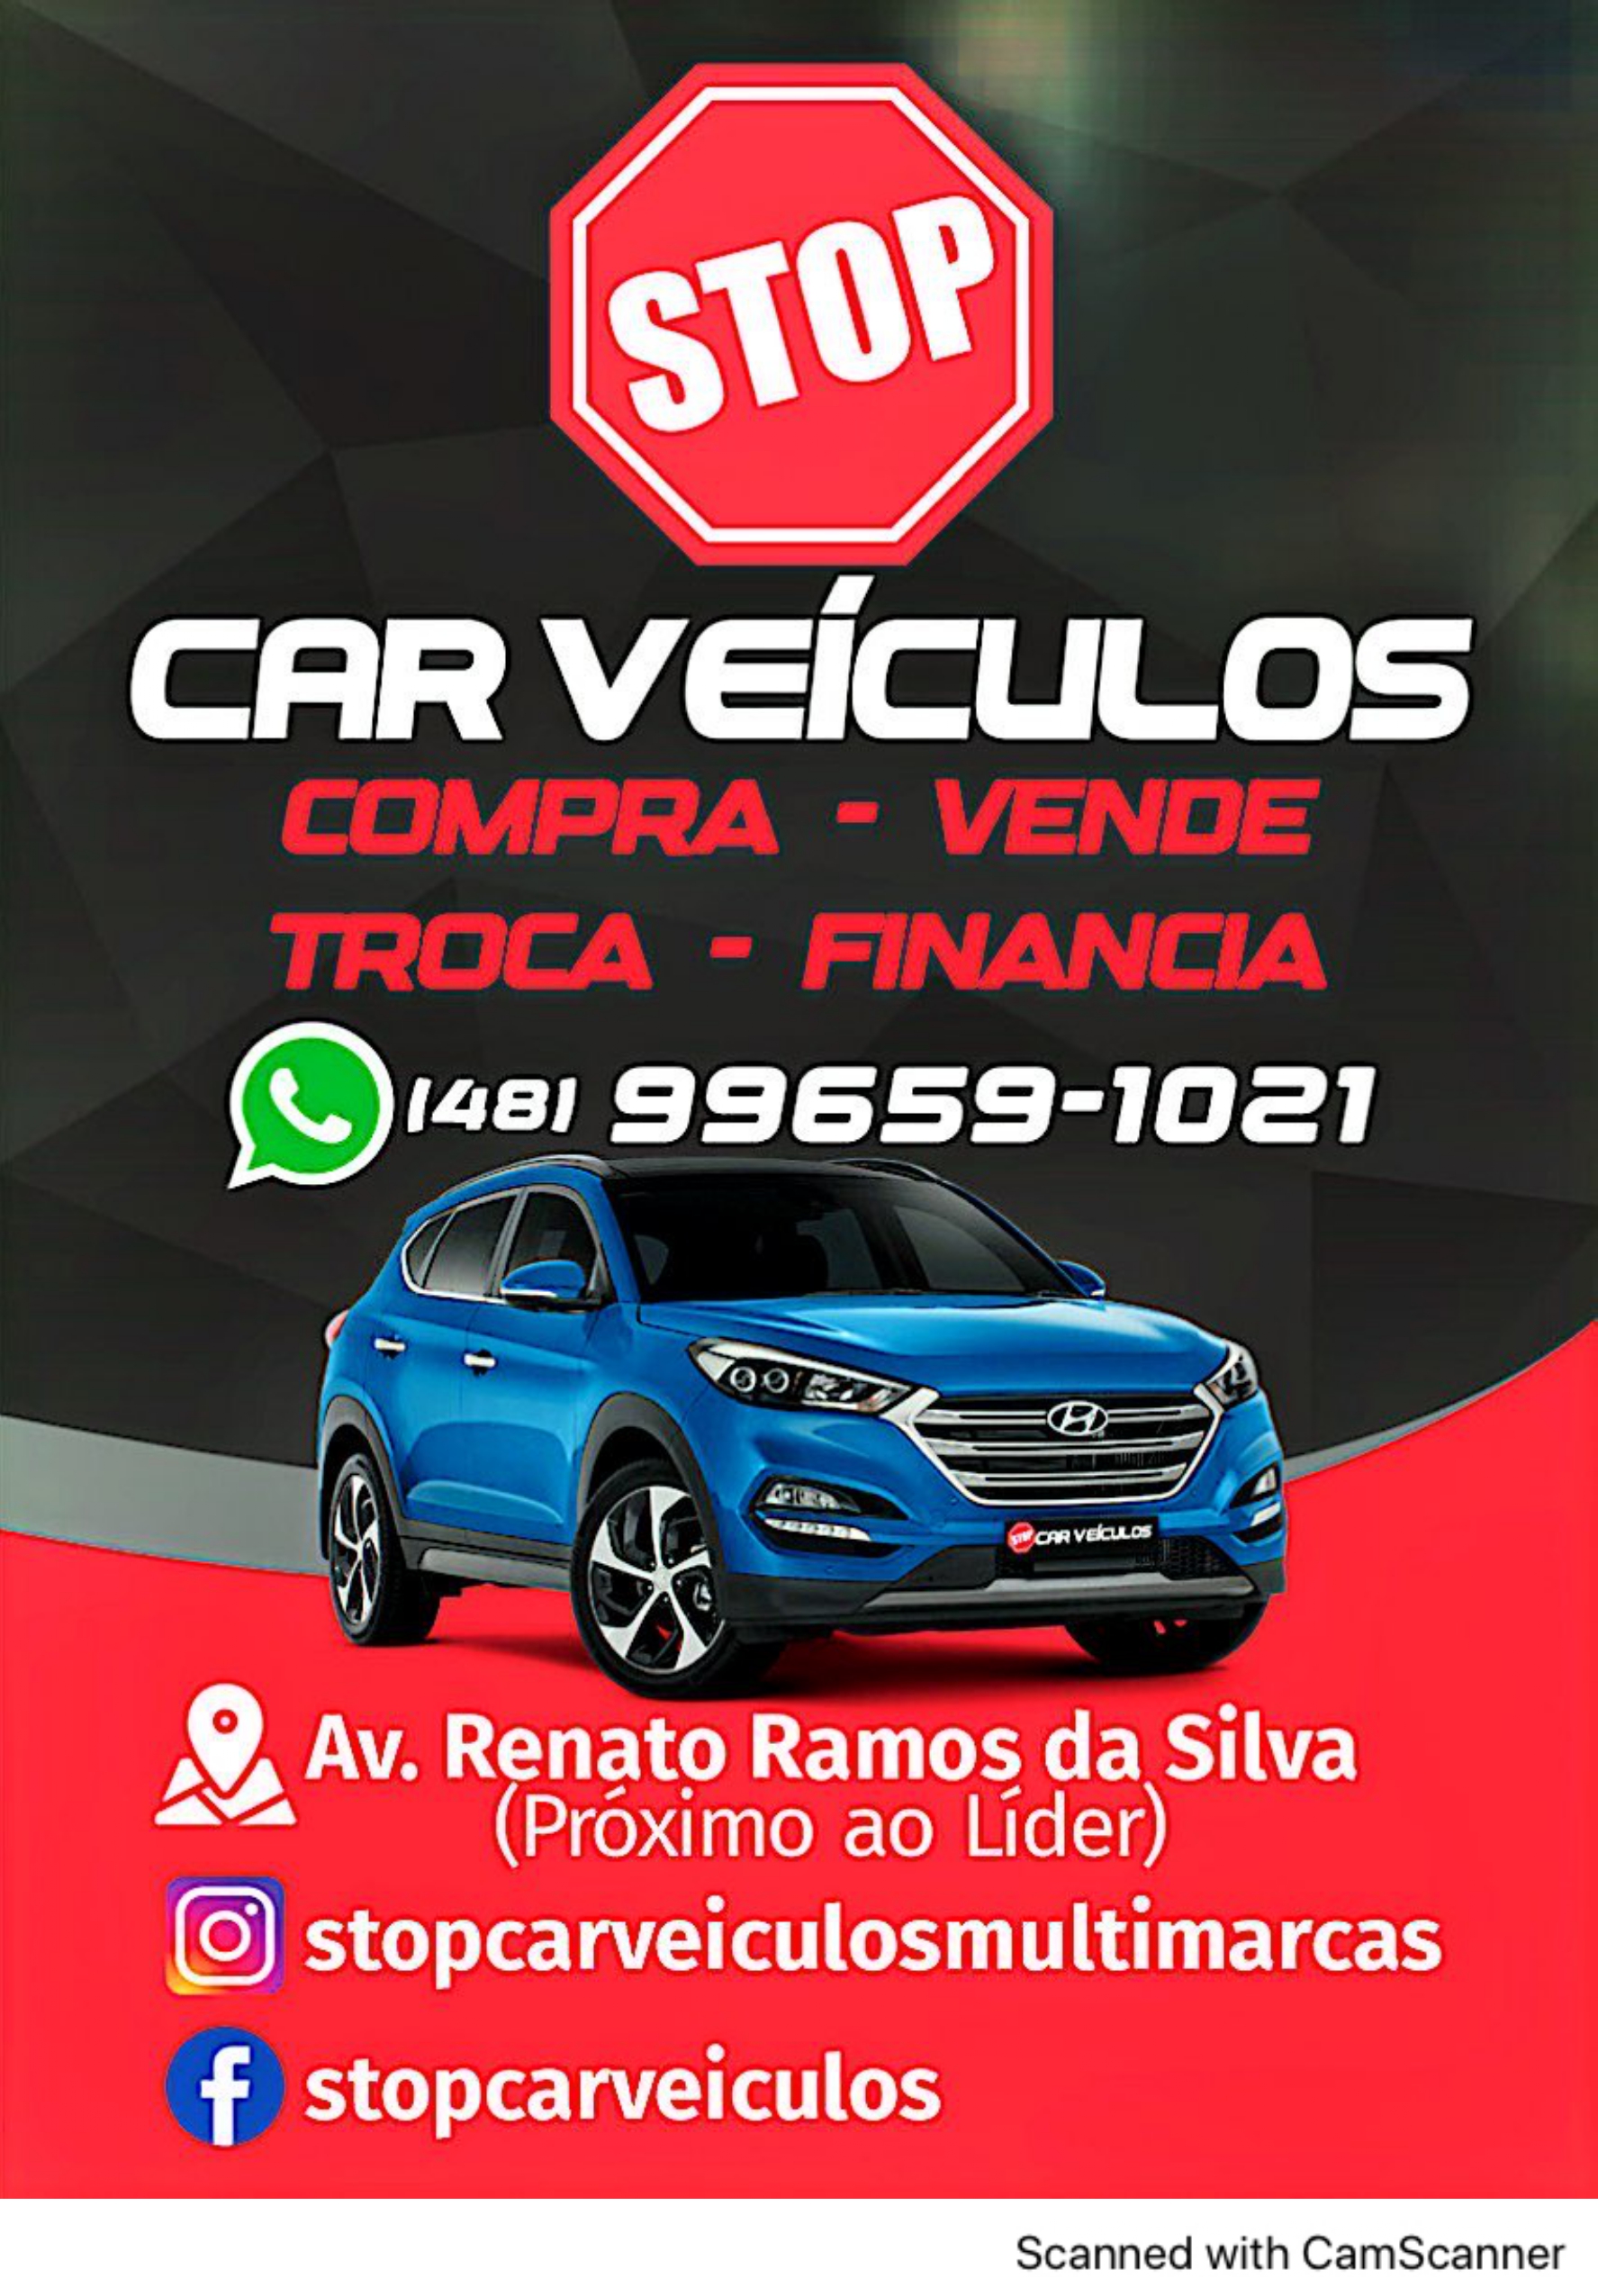 Stop Car Veiculos